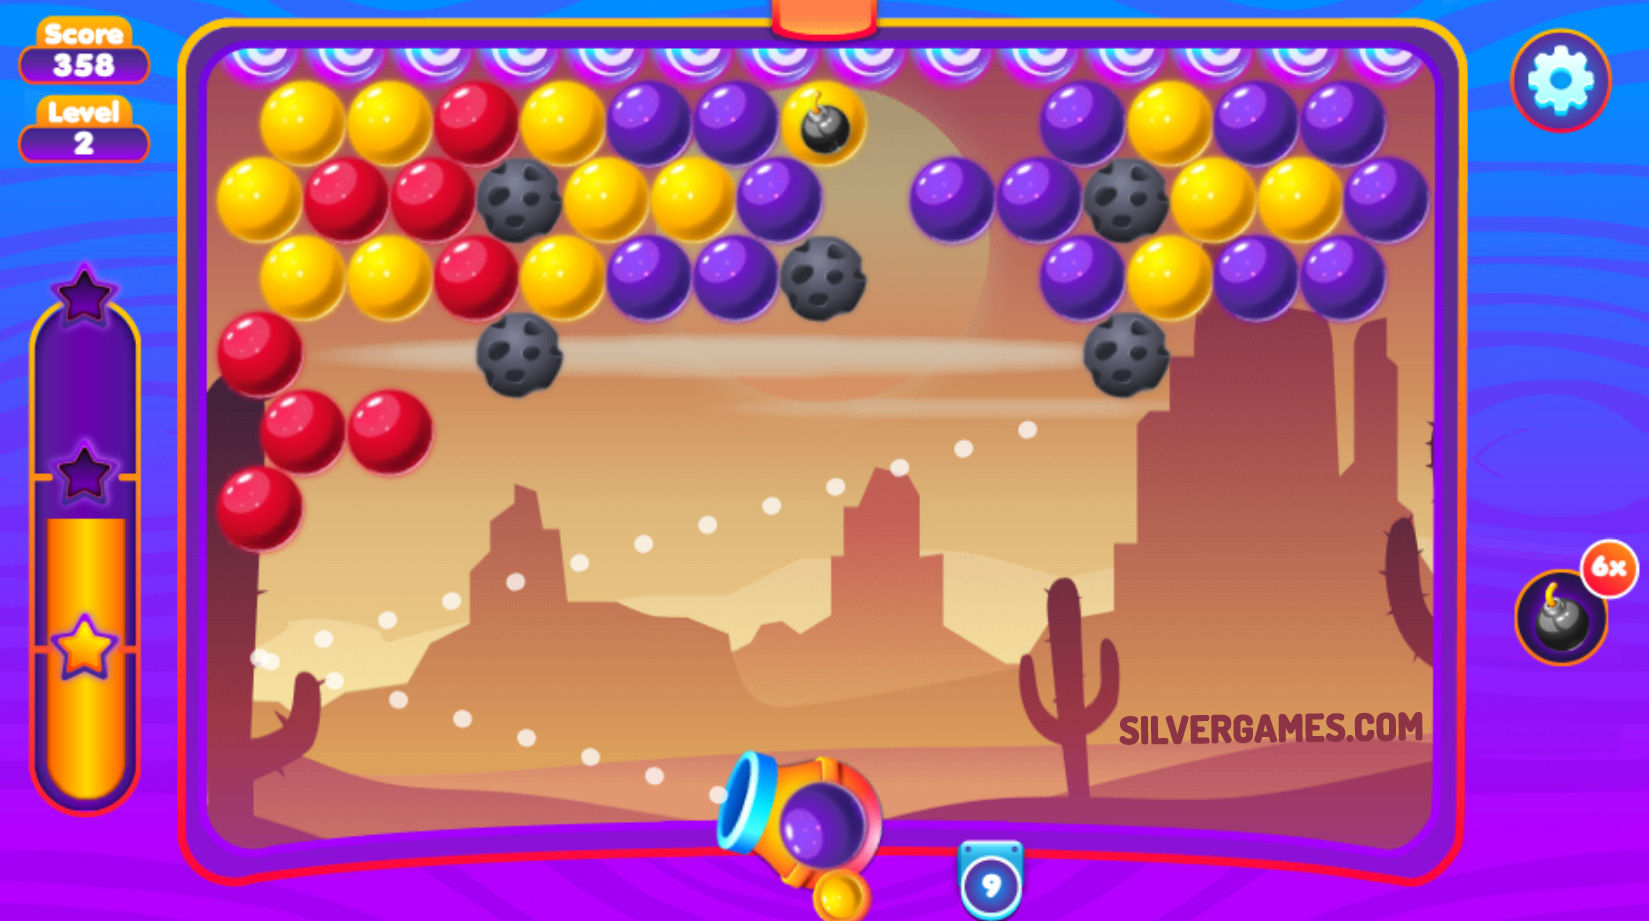 Jogue Tingly Bubble Shooter jogo online grátis